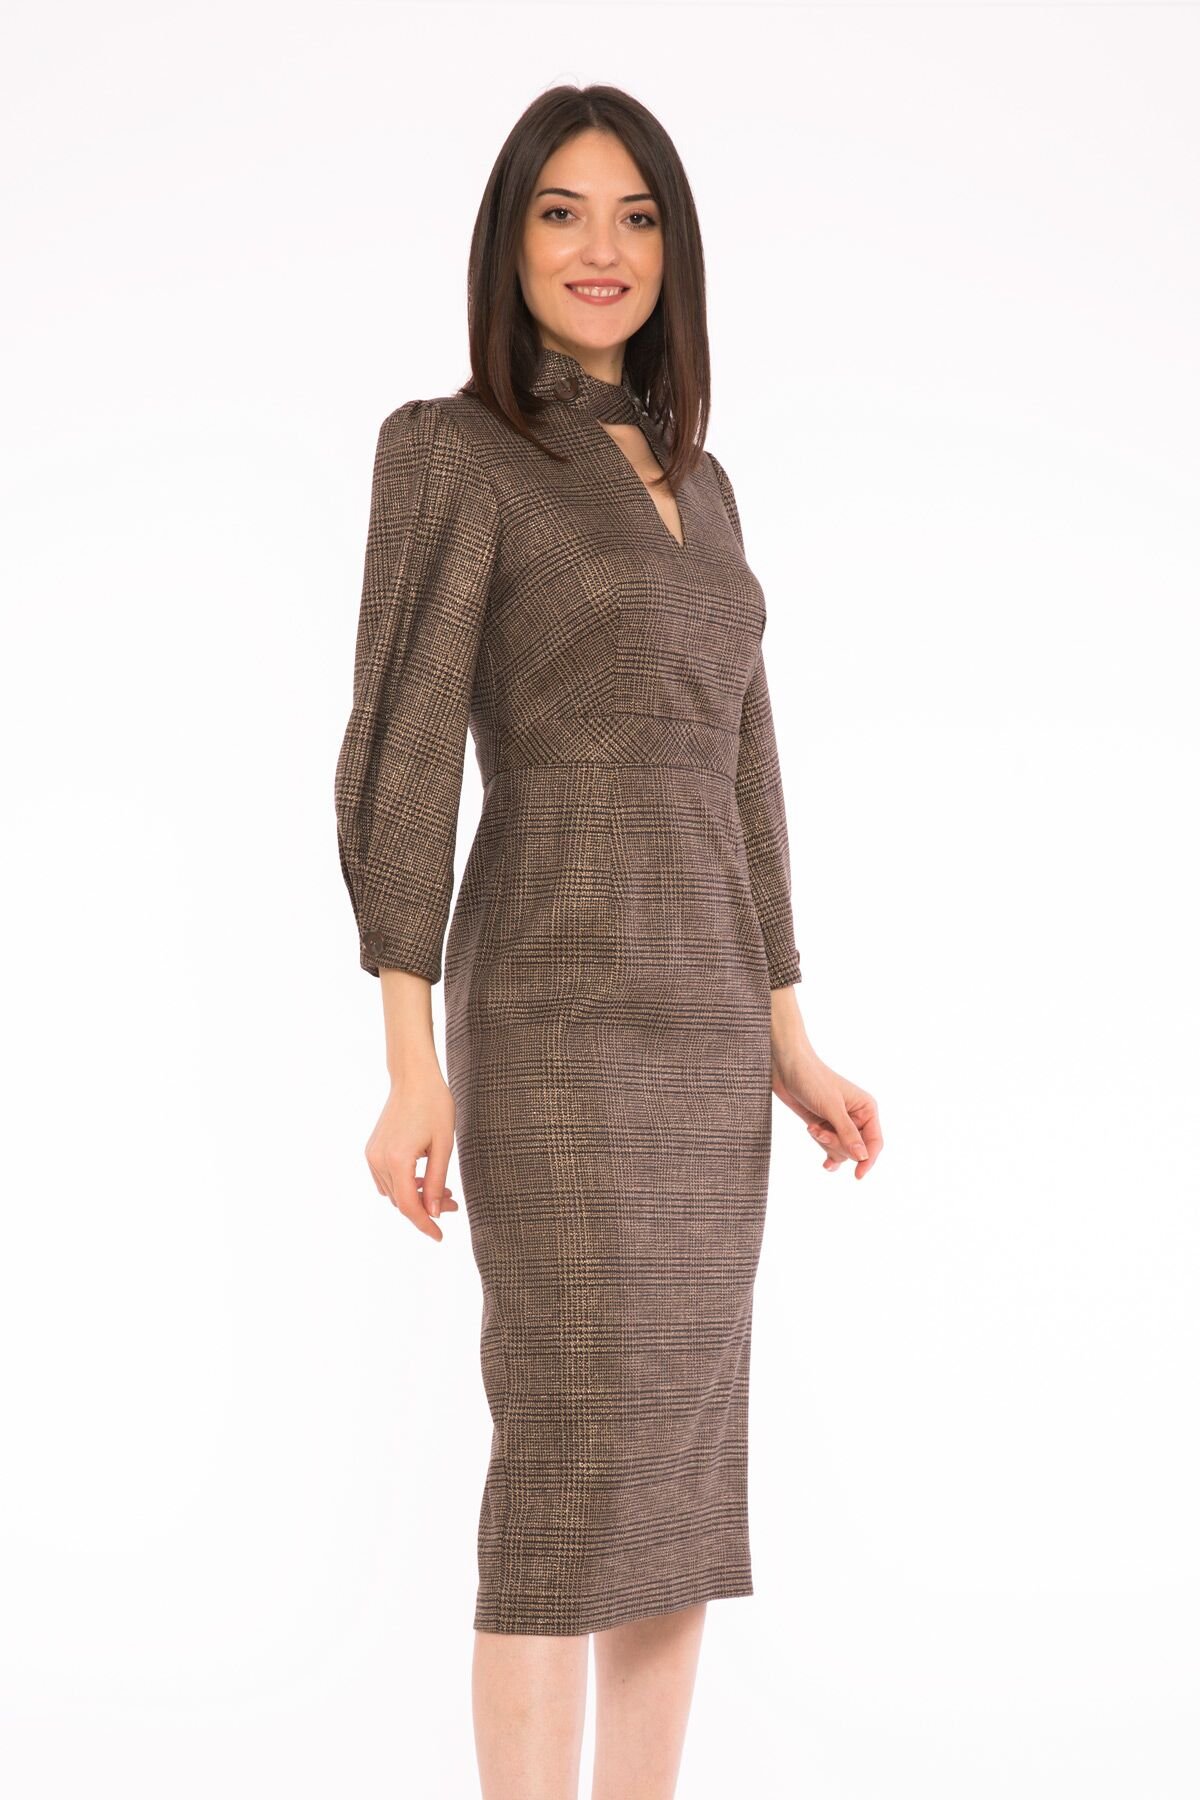 Metallic Plaid Fabric, Stand-Up Collar Midi Pencil Dress